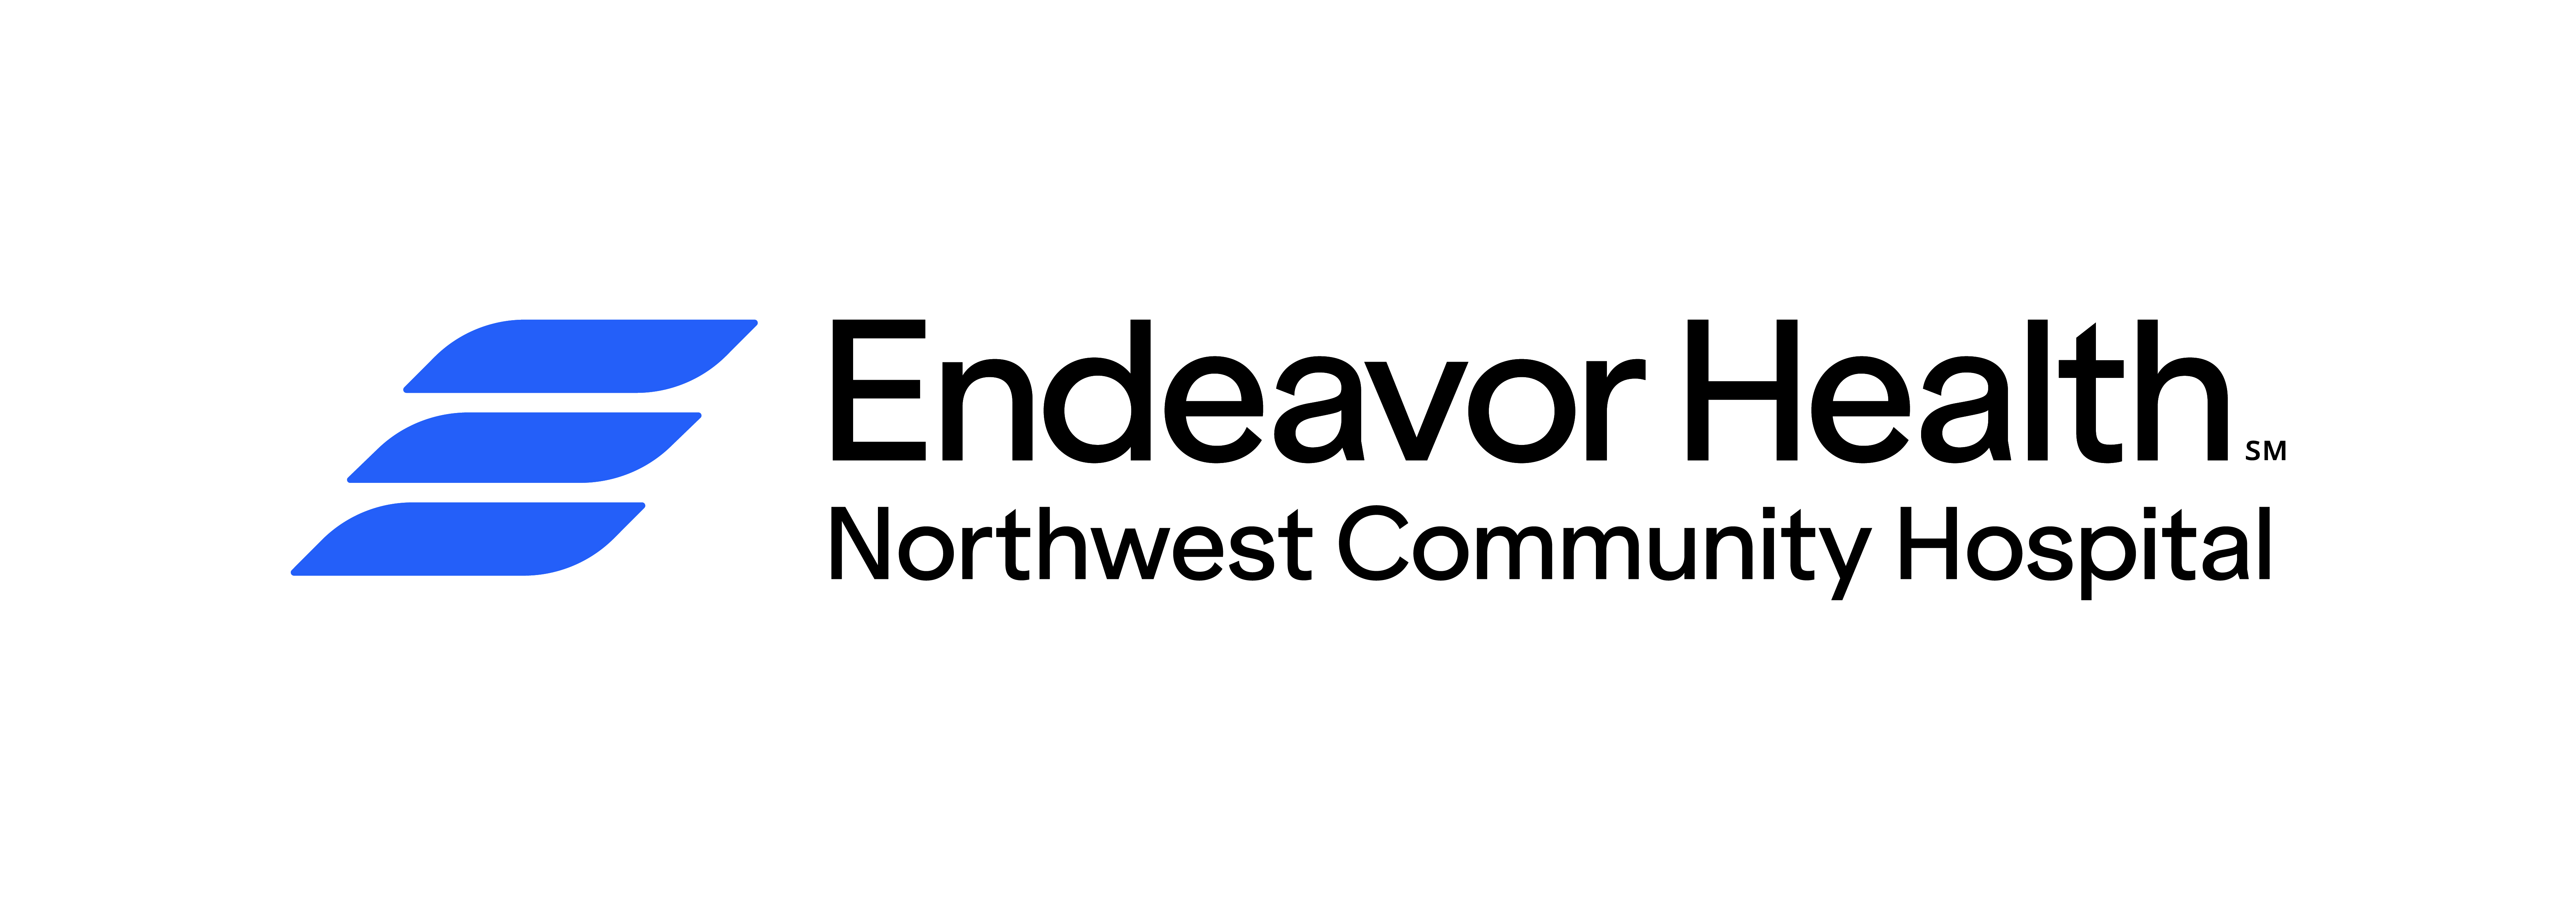 NCH Endeavor Health logo